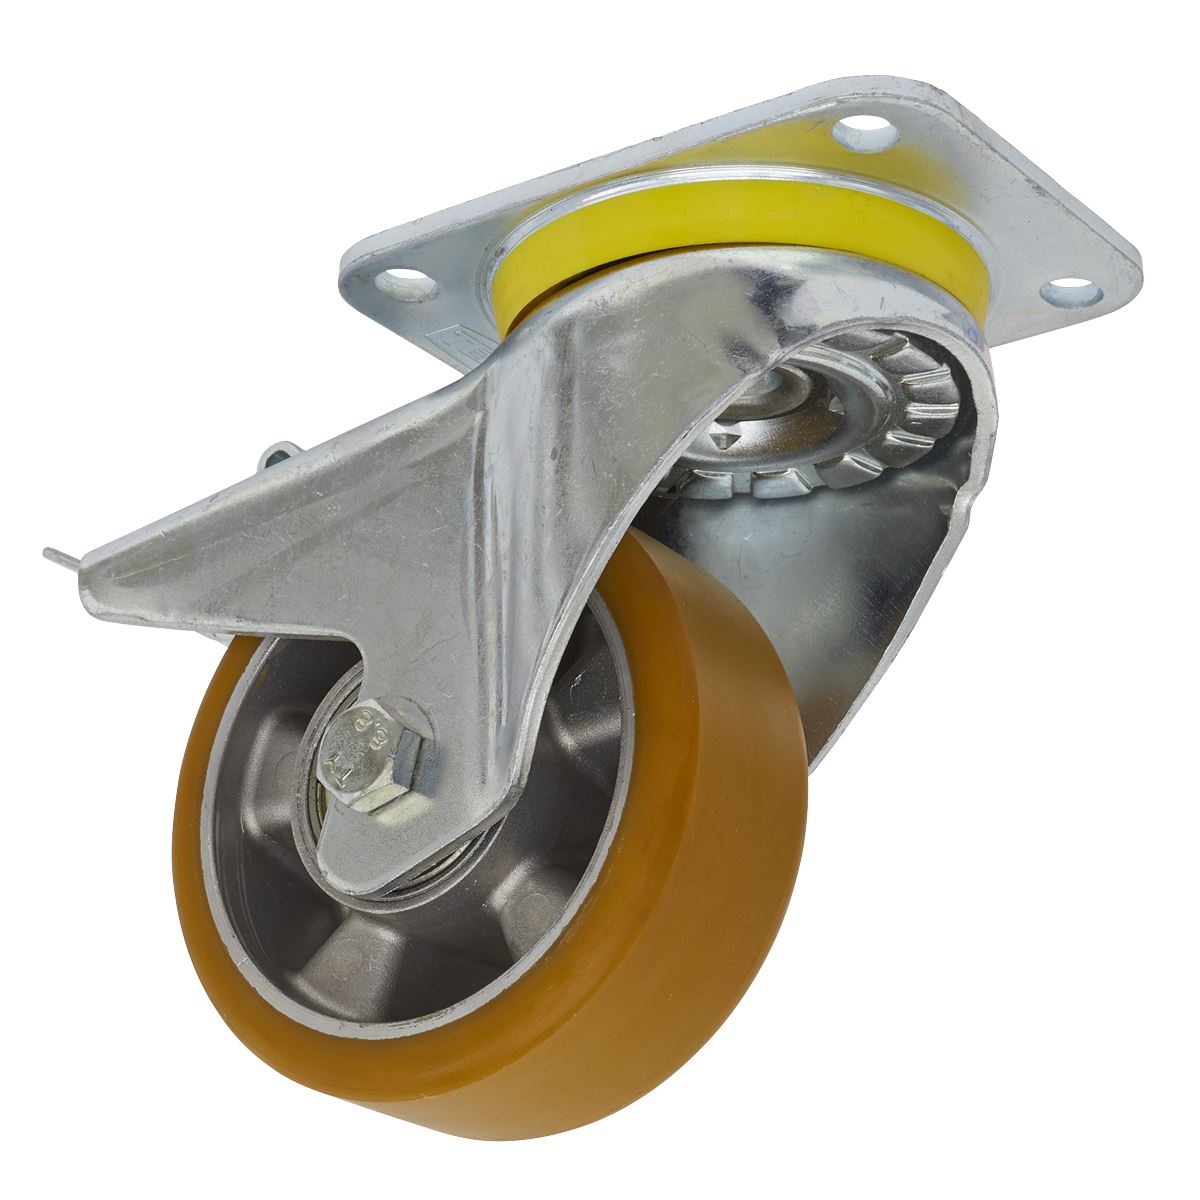 Sealey Castor Wheel Swivel Plate with Total Lock Ø125mm